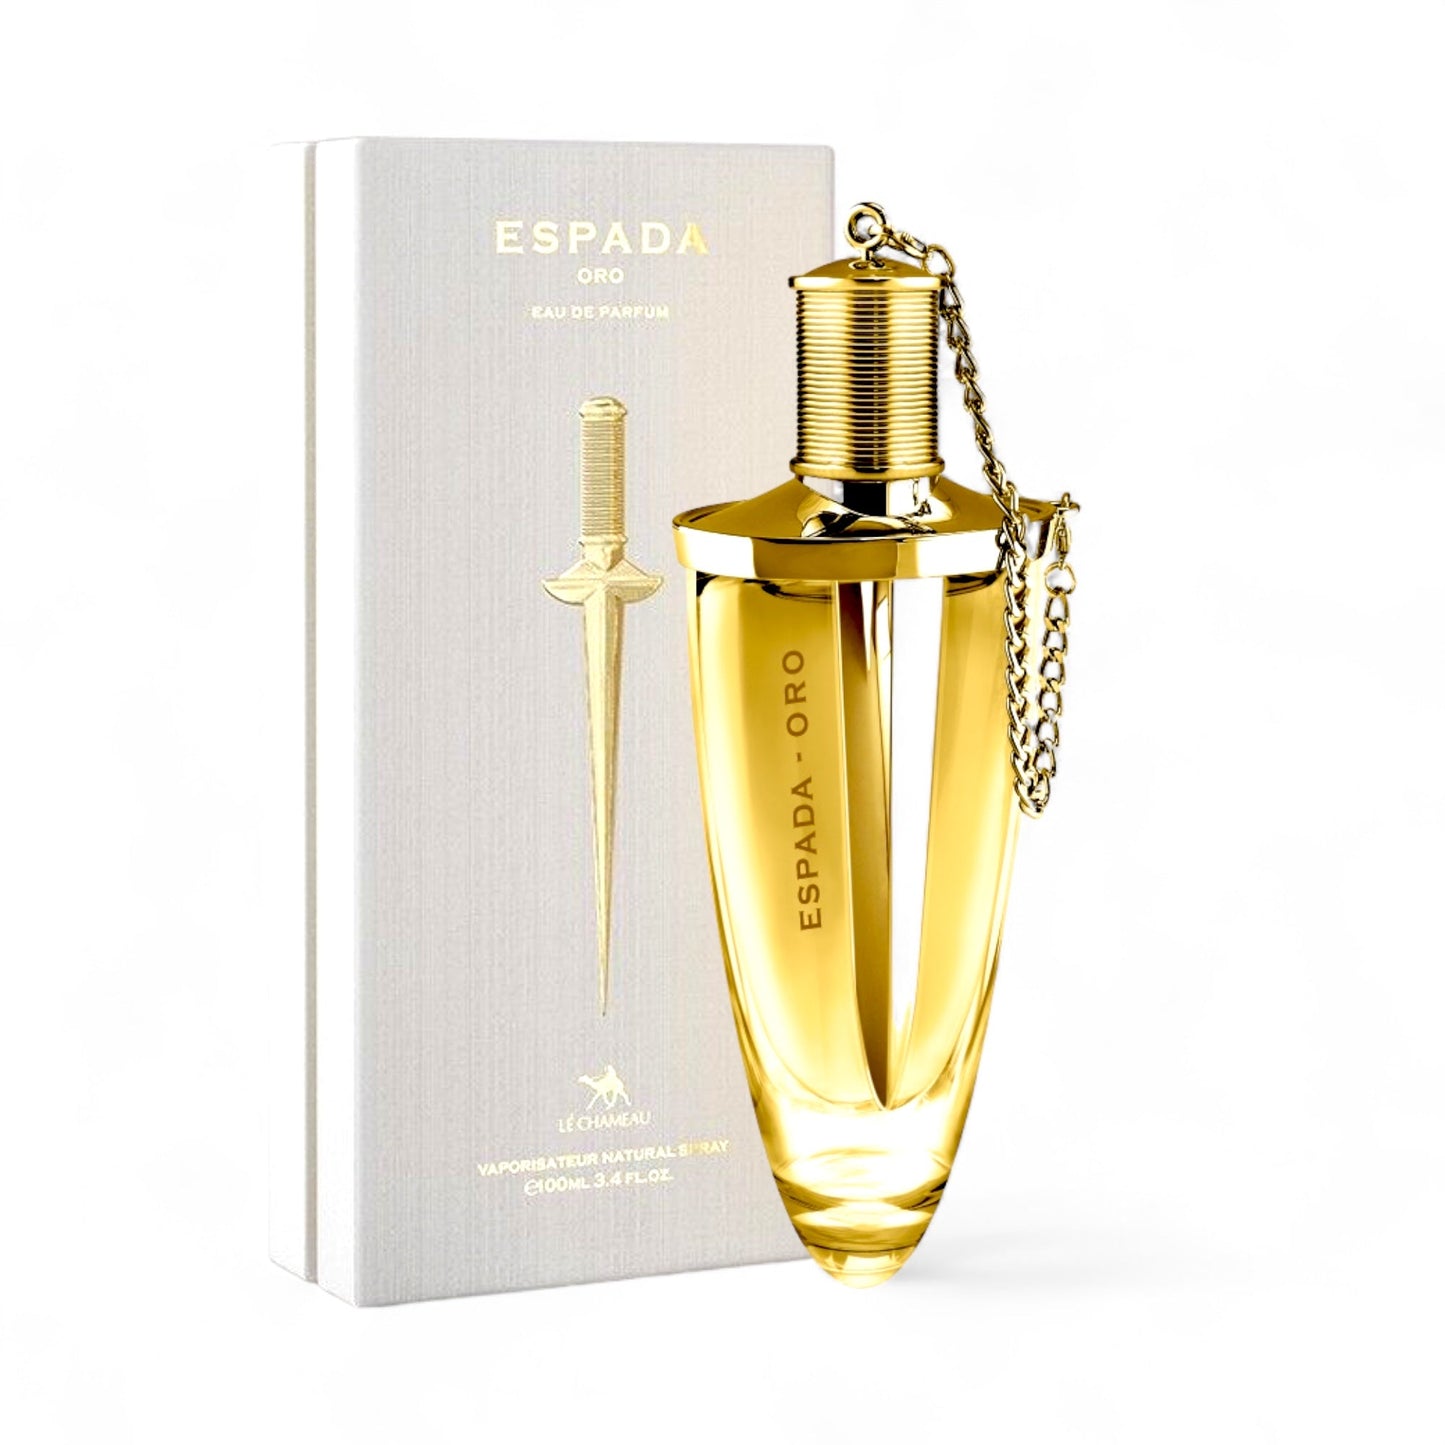 Espada Oro by Le Chameau Eau de Parfum Spray 3.4 Oz Women